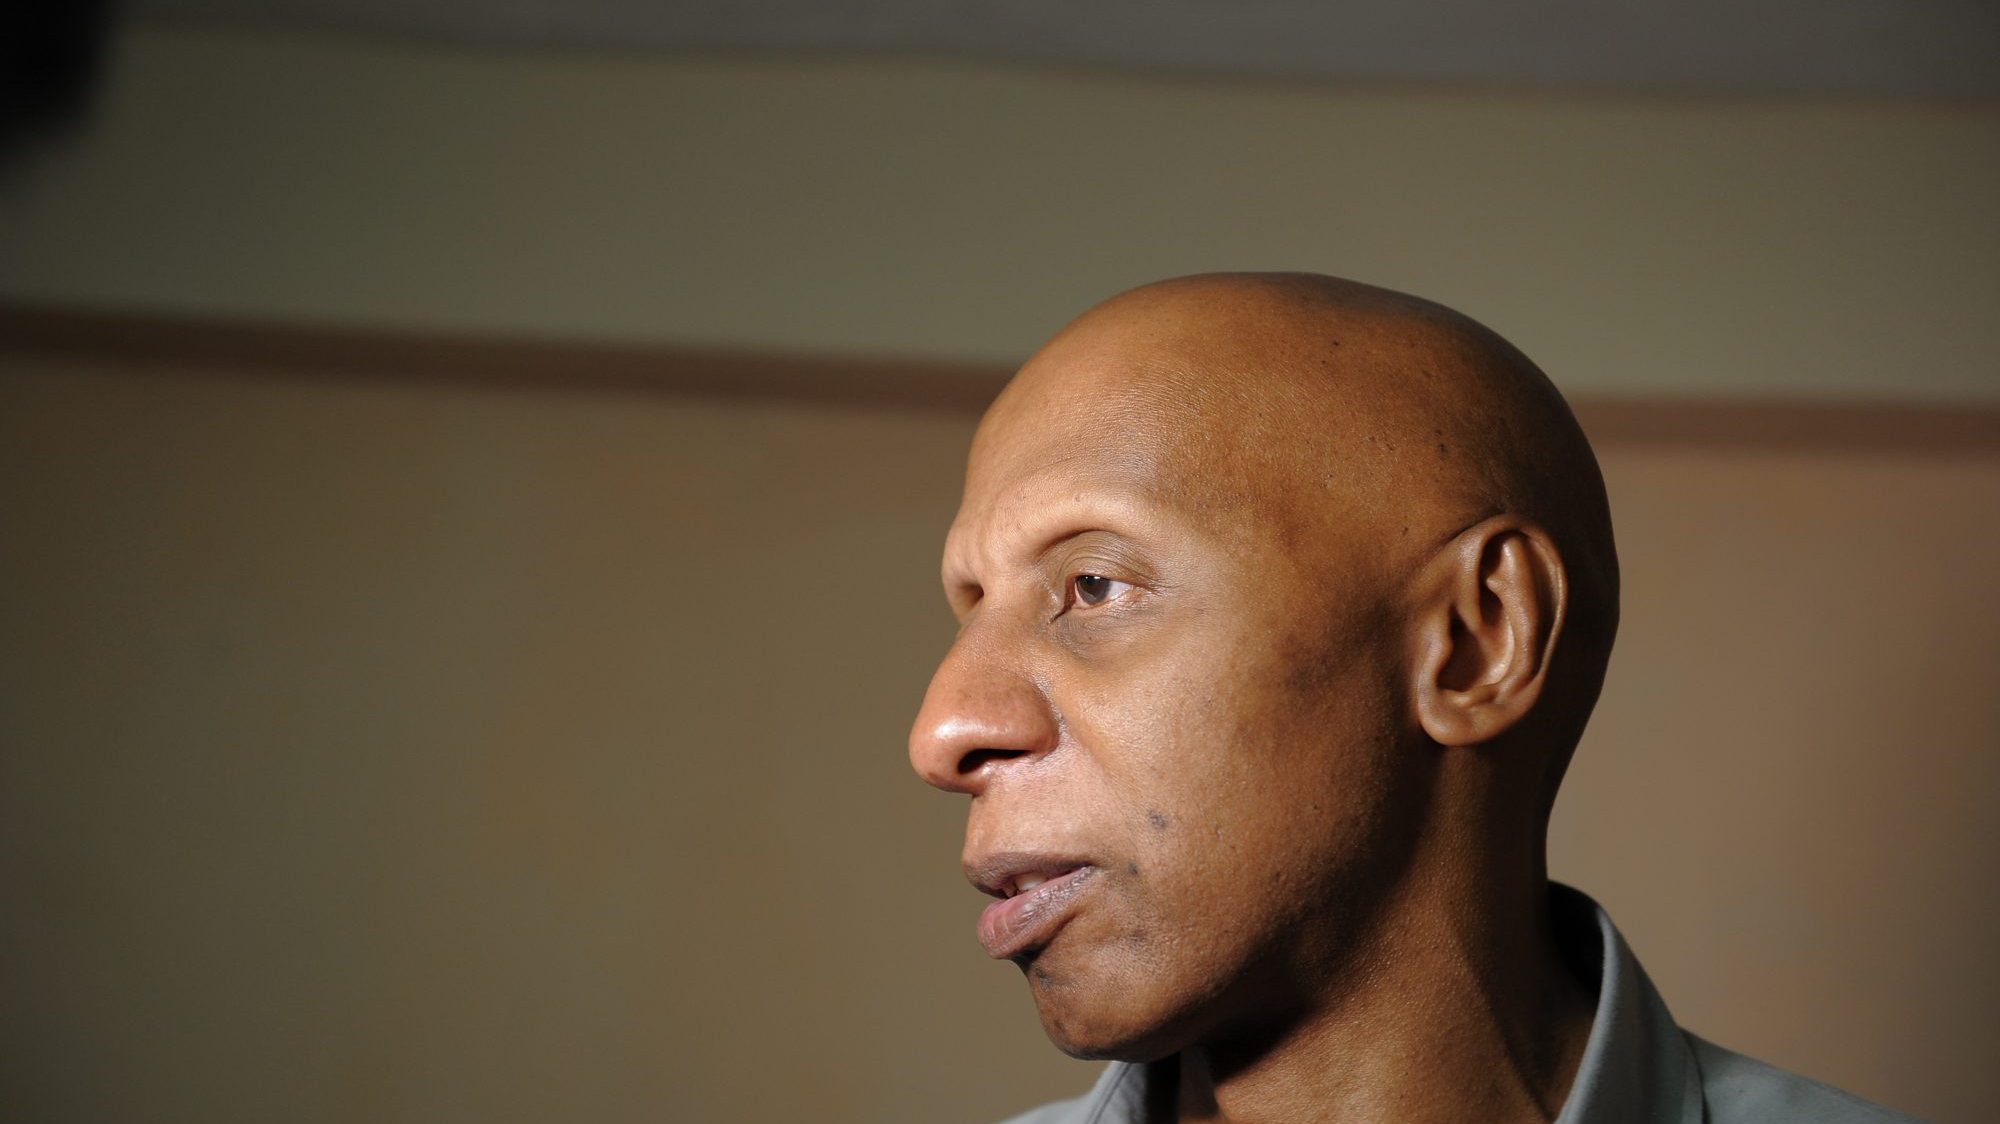 Gullermo Fariñas lidera um movimento de dissidentes cubanos contra o regime de Miguel Díaz-Canel